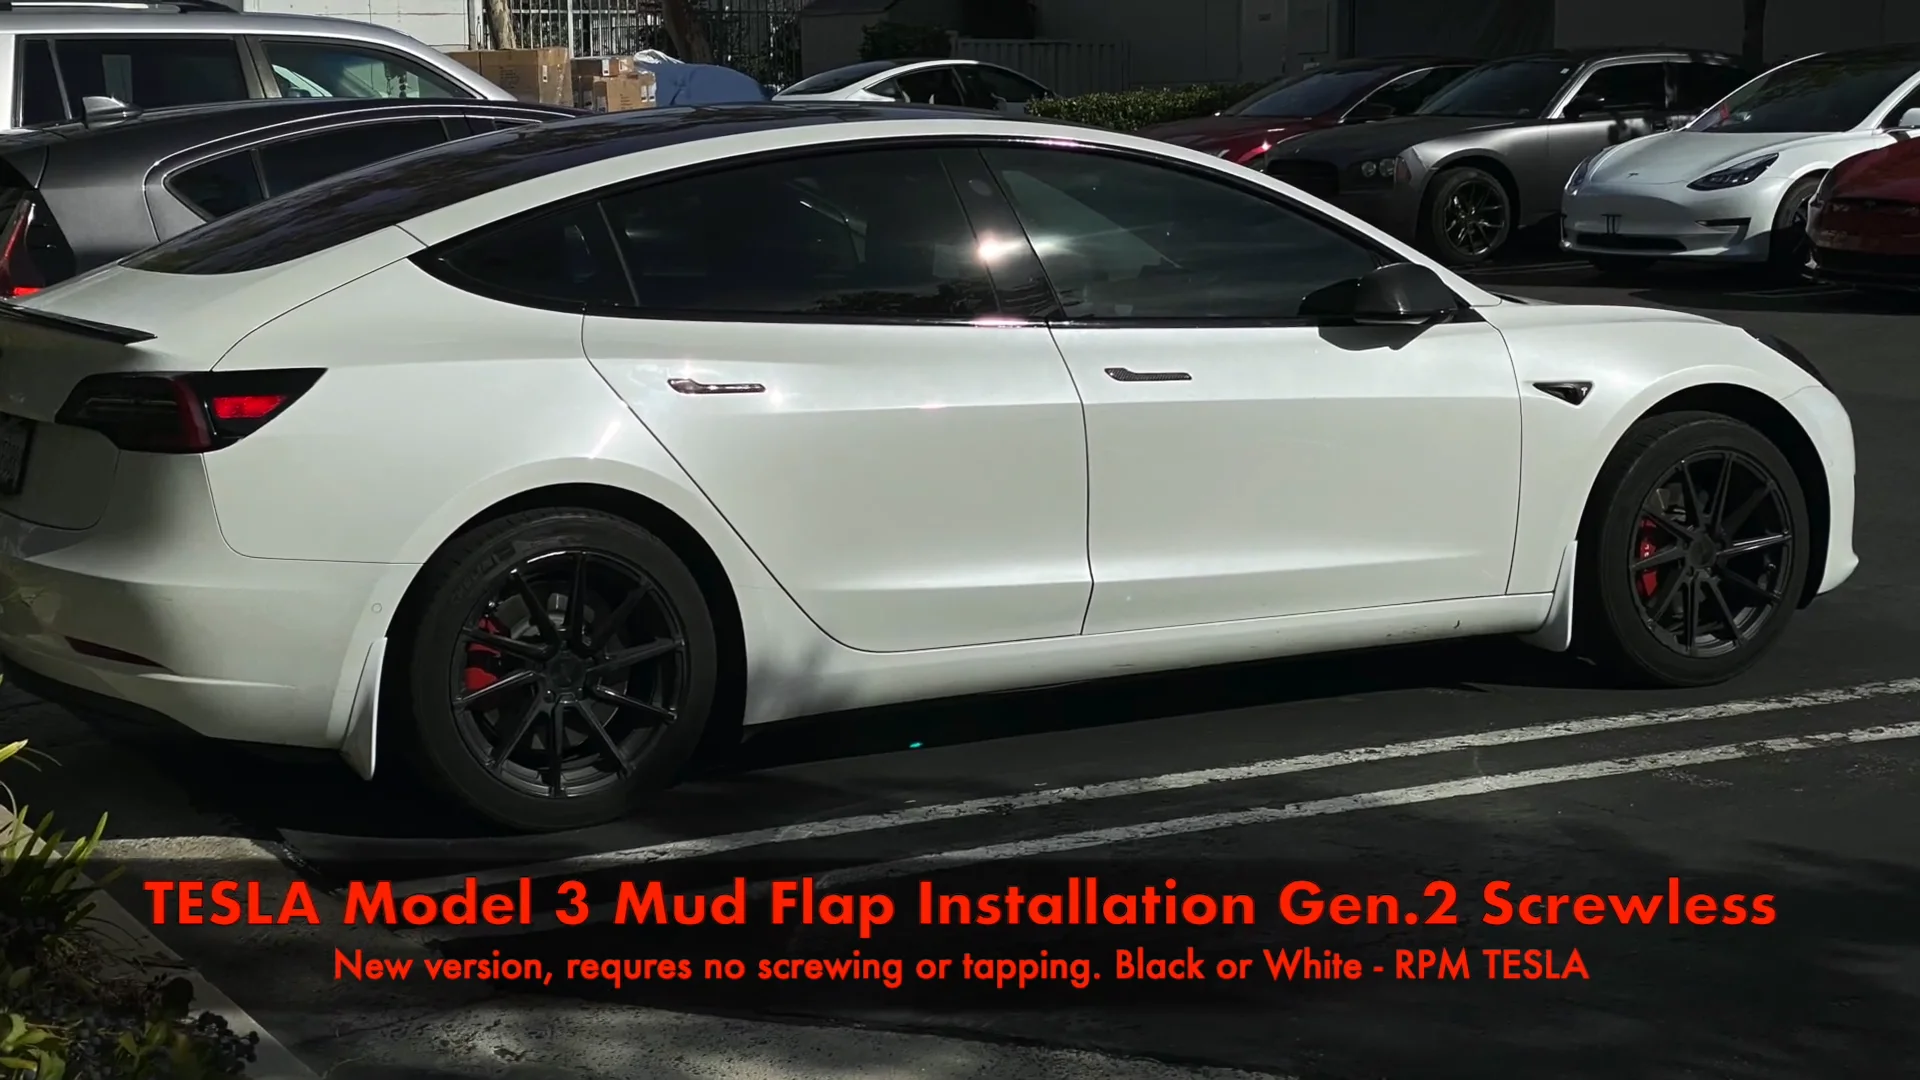 TESLA Model 3 Gen. 2 Mud Flap Installation Video. RPMTESLA on Vimeo